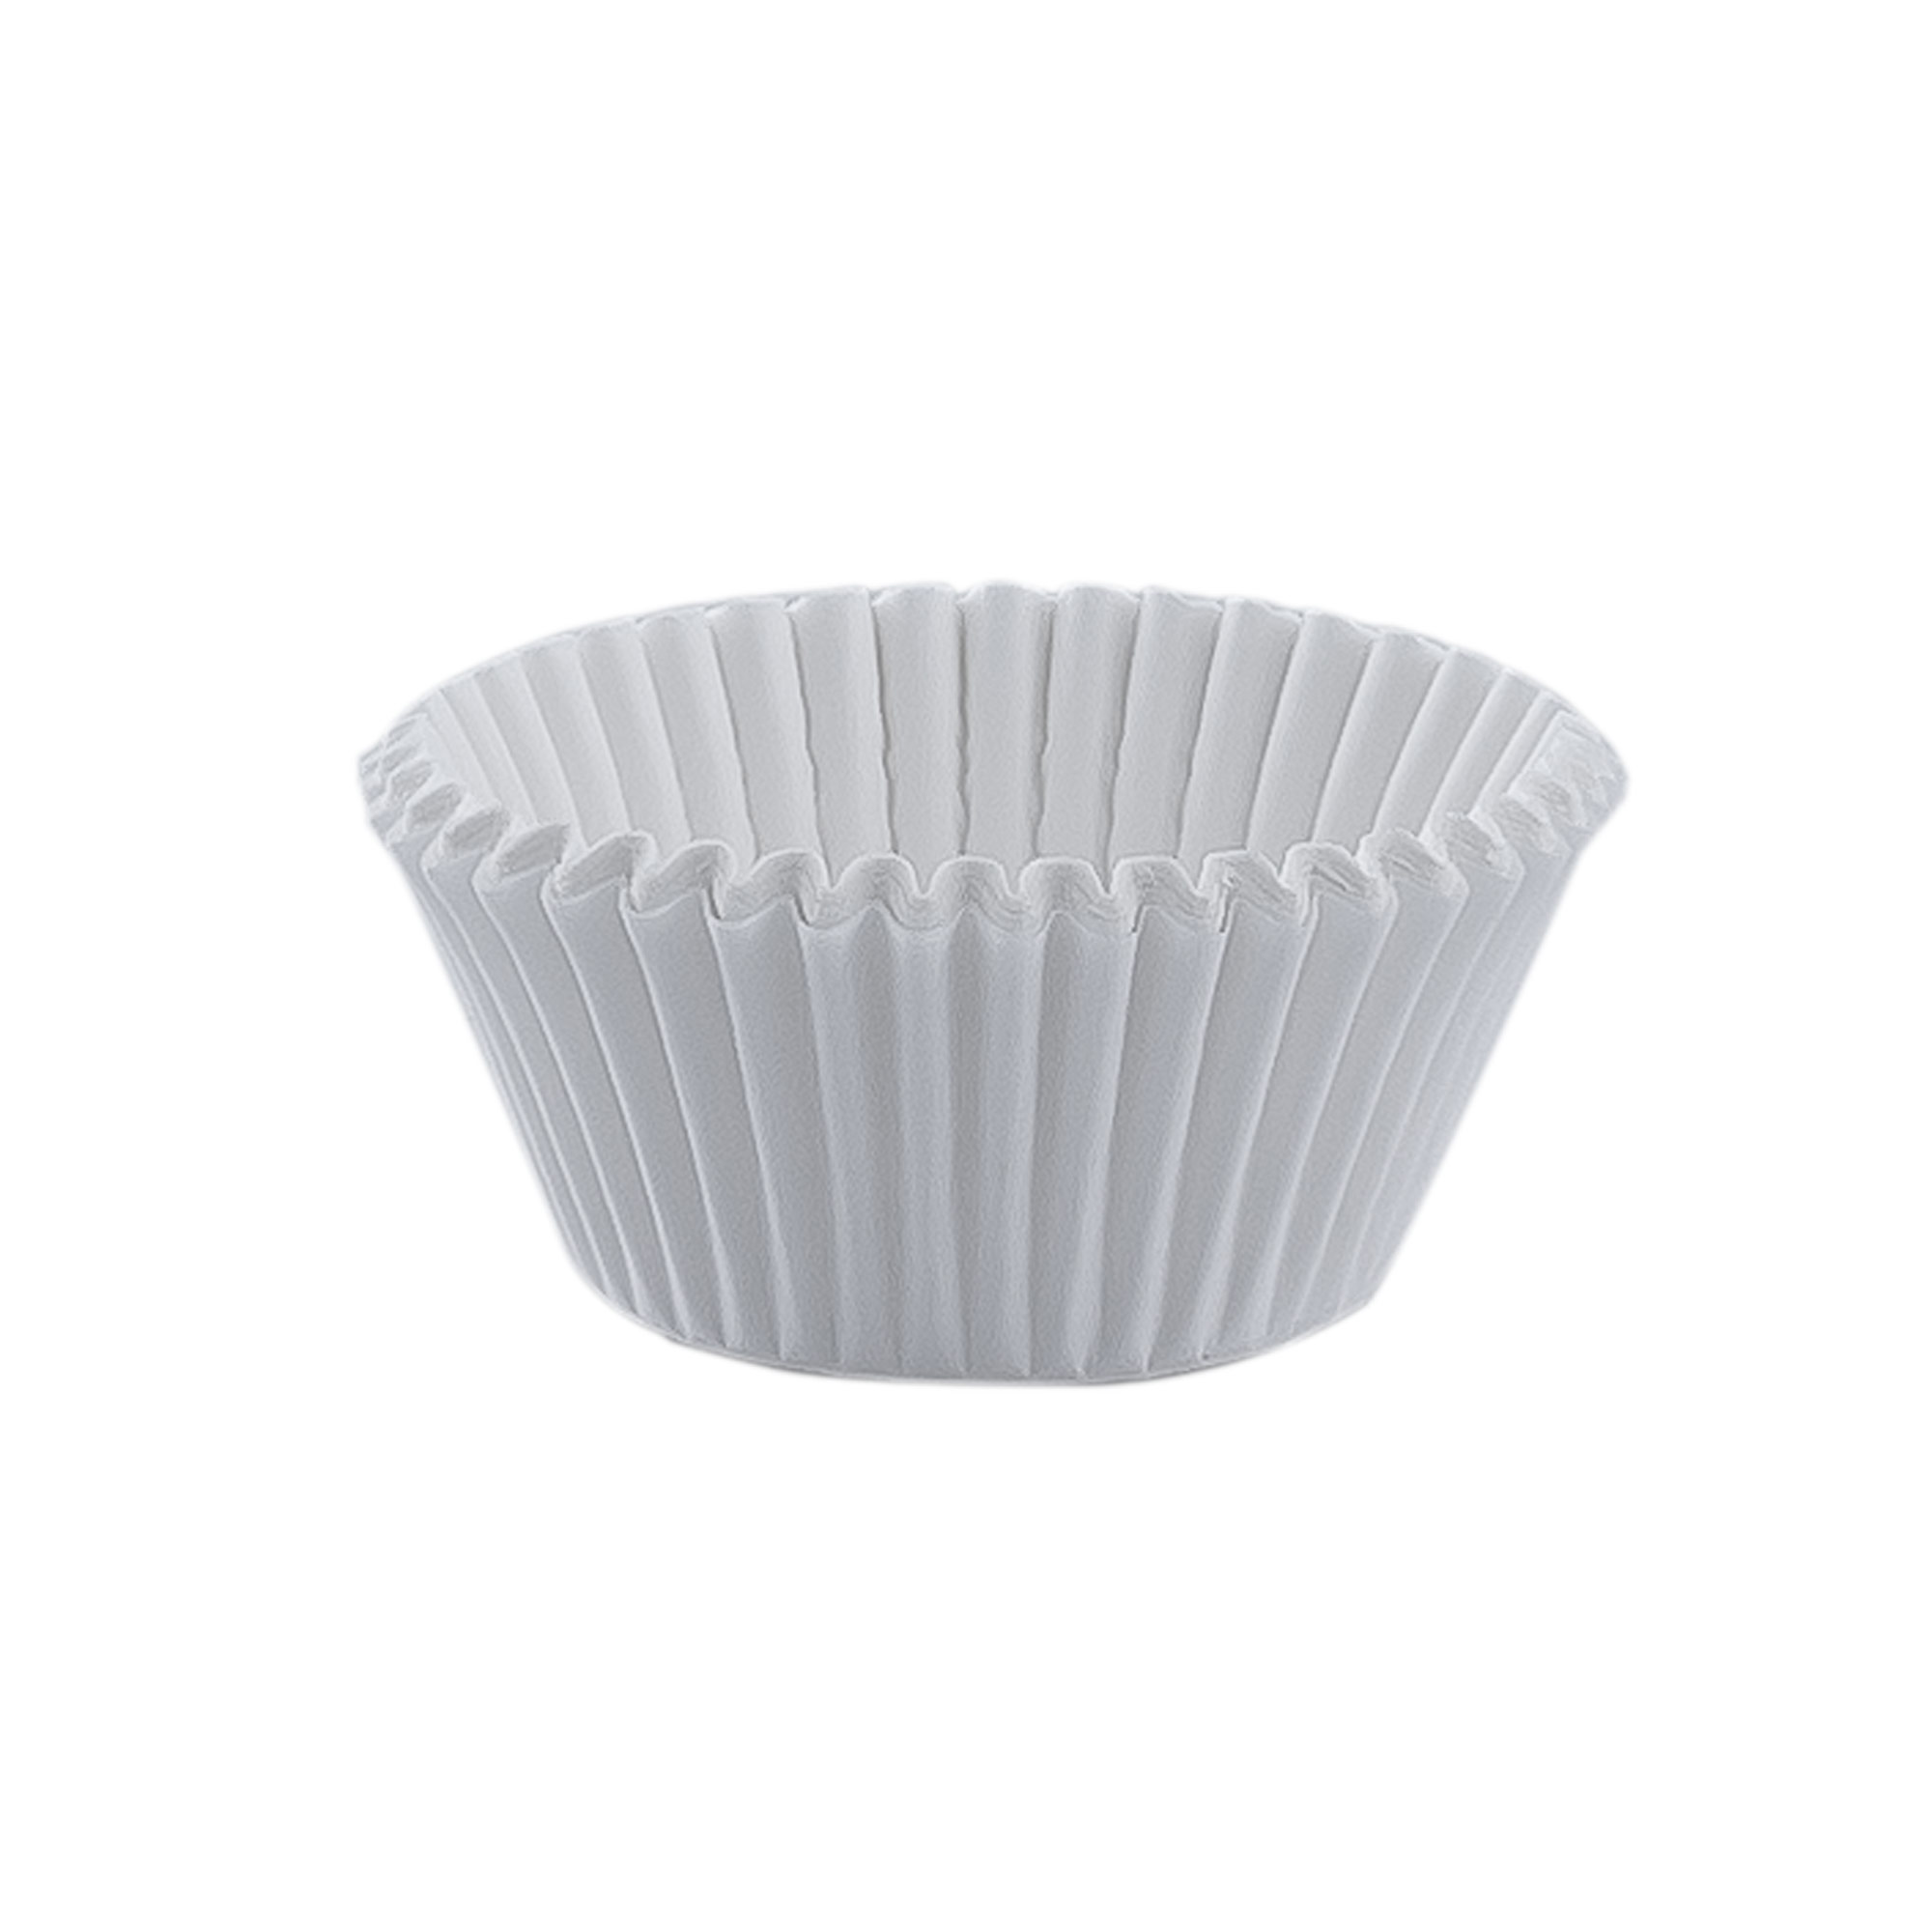 Cupcake Baking Cups (Floral Design & White Colour)